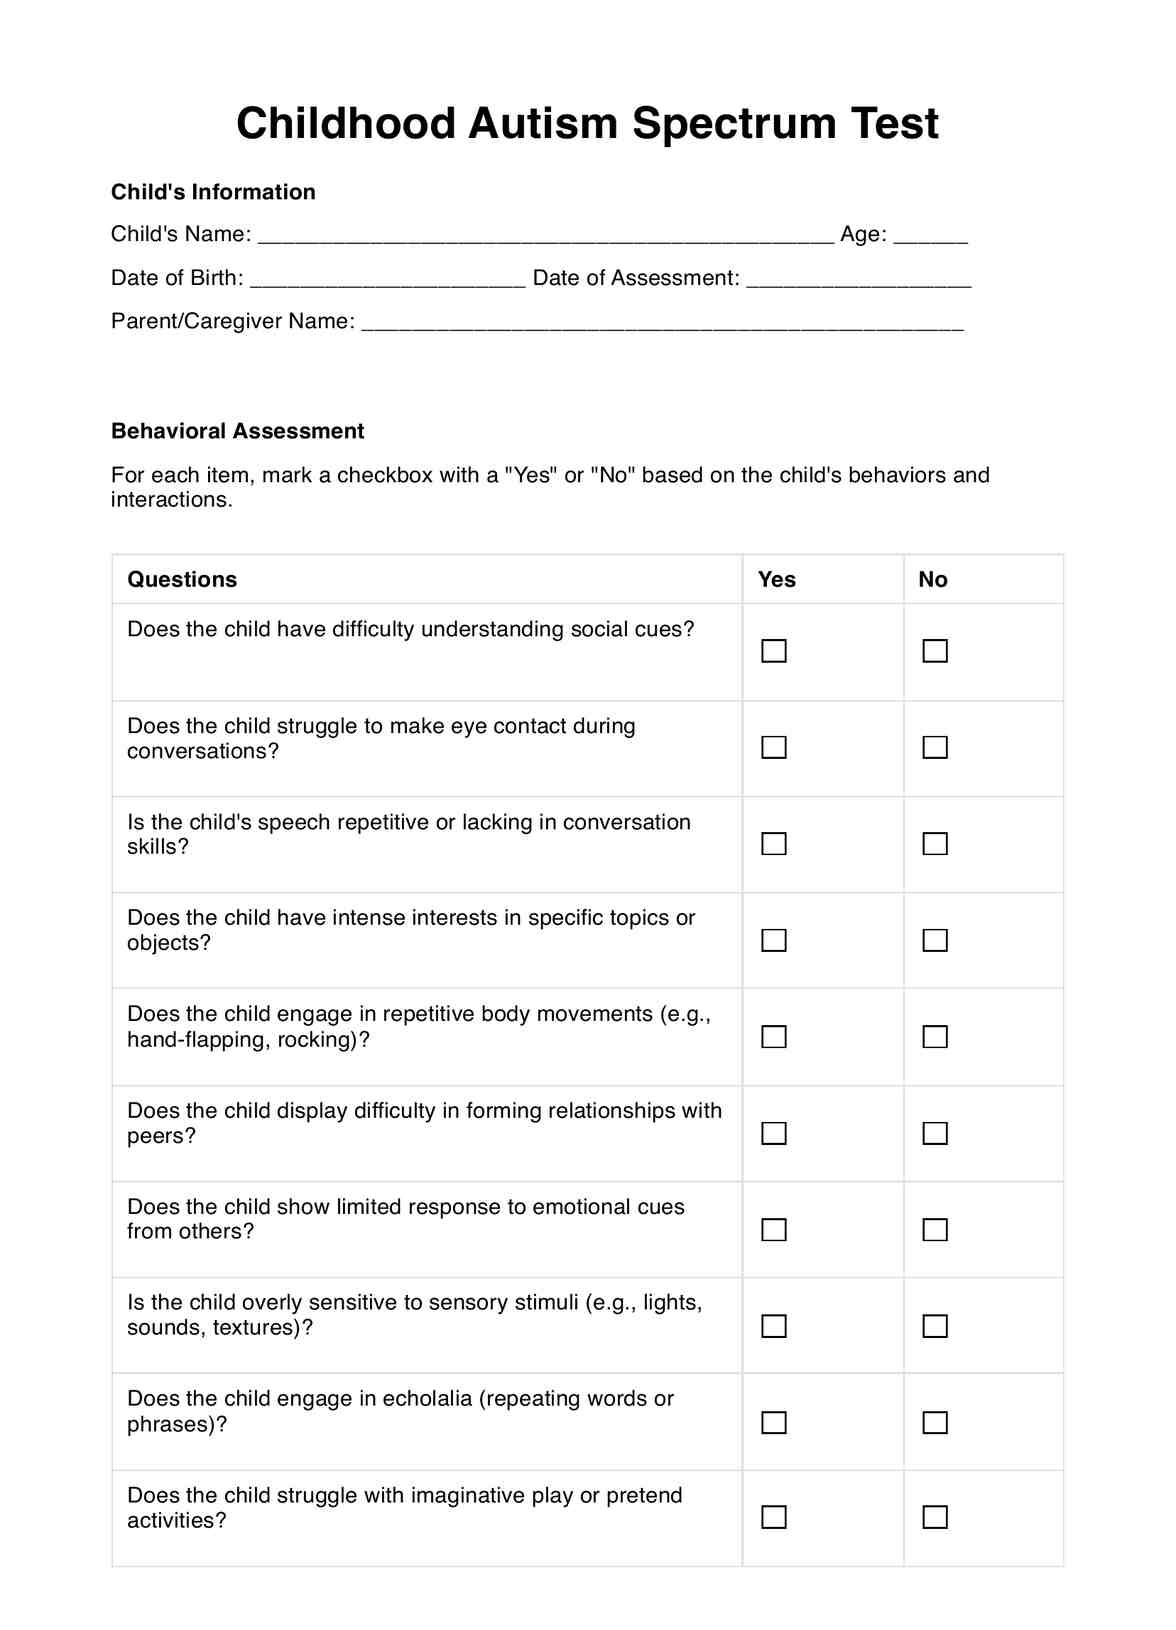 Childhood Autism Spectrum Test PDF Example